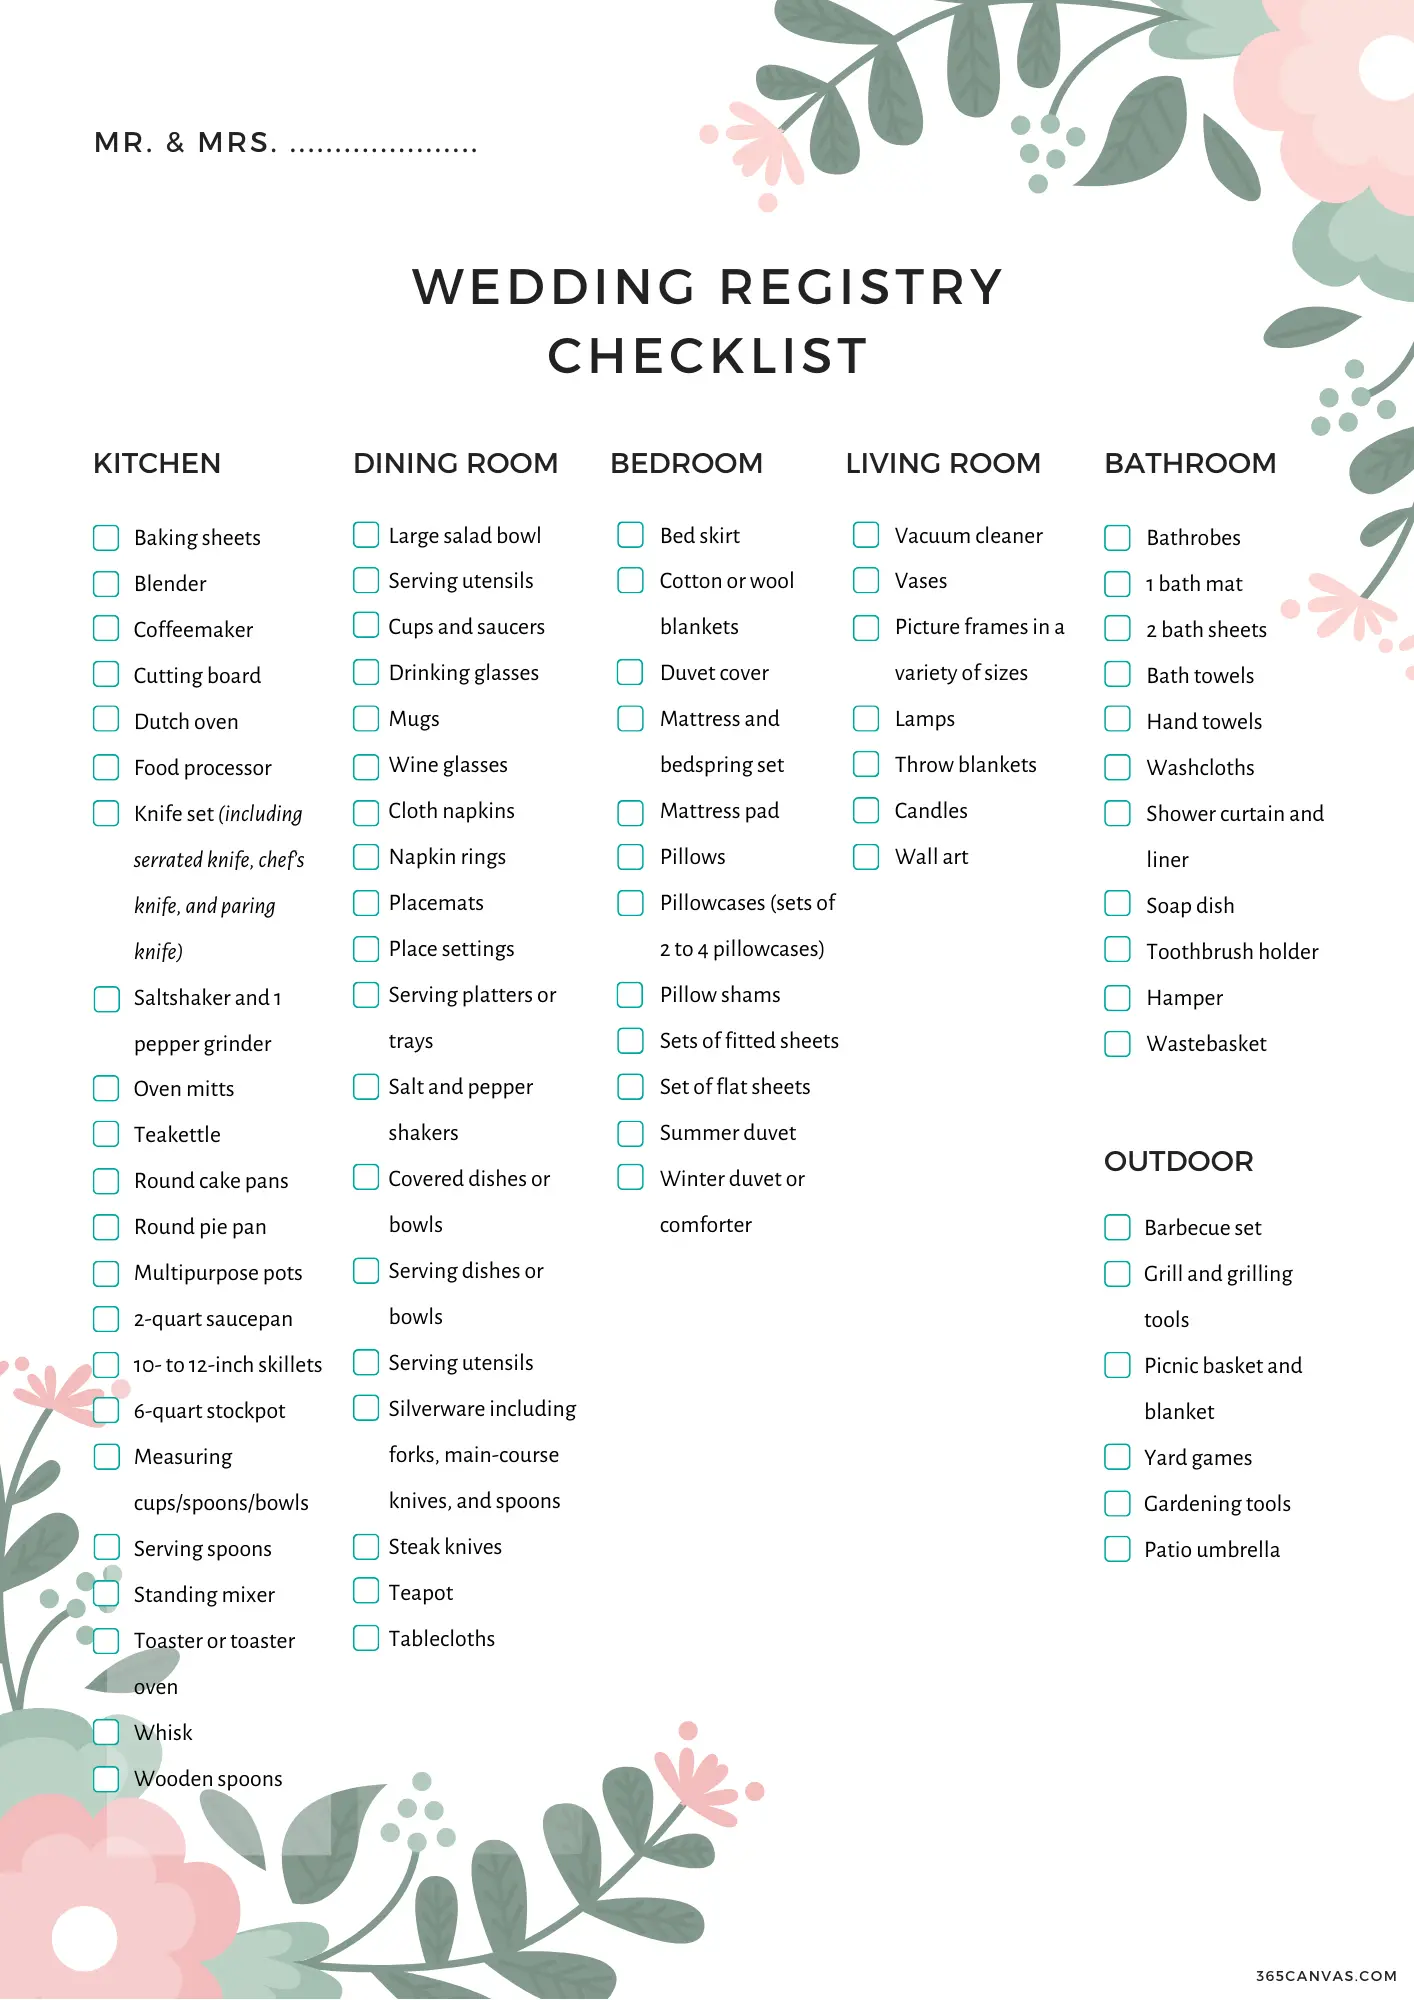 The Complete Wedding Registry Checklist (Free Printable ...